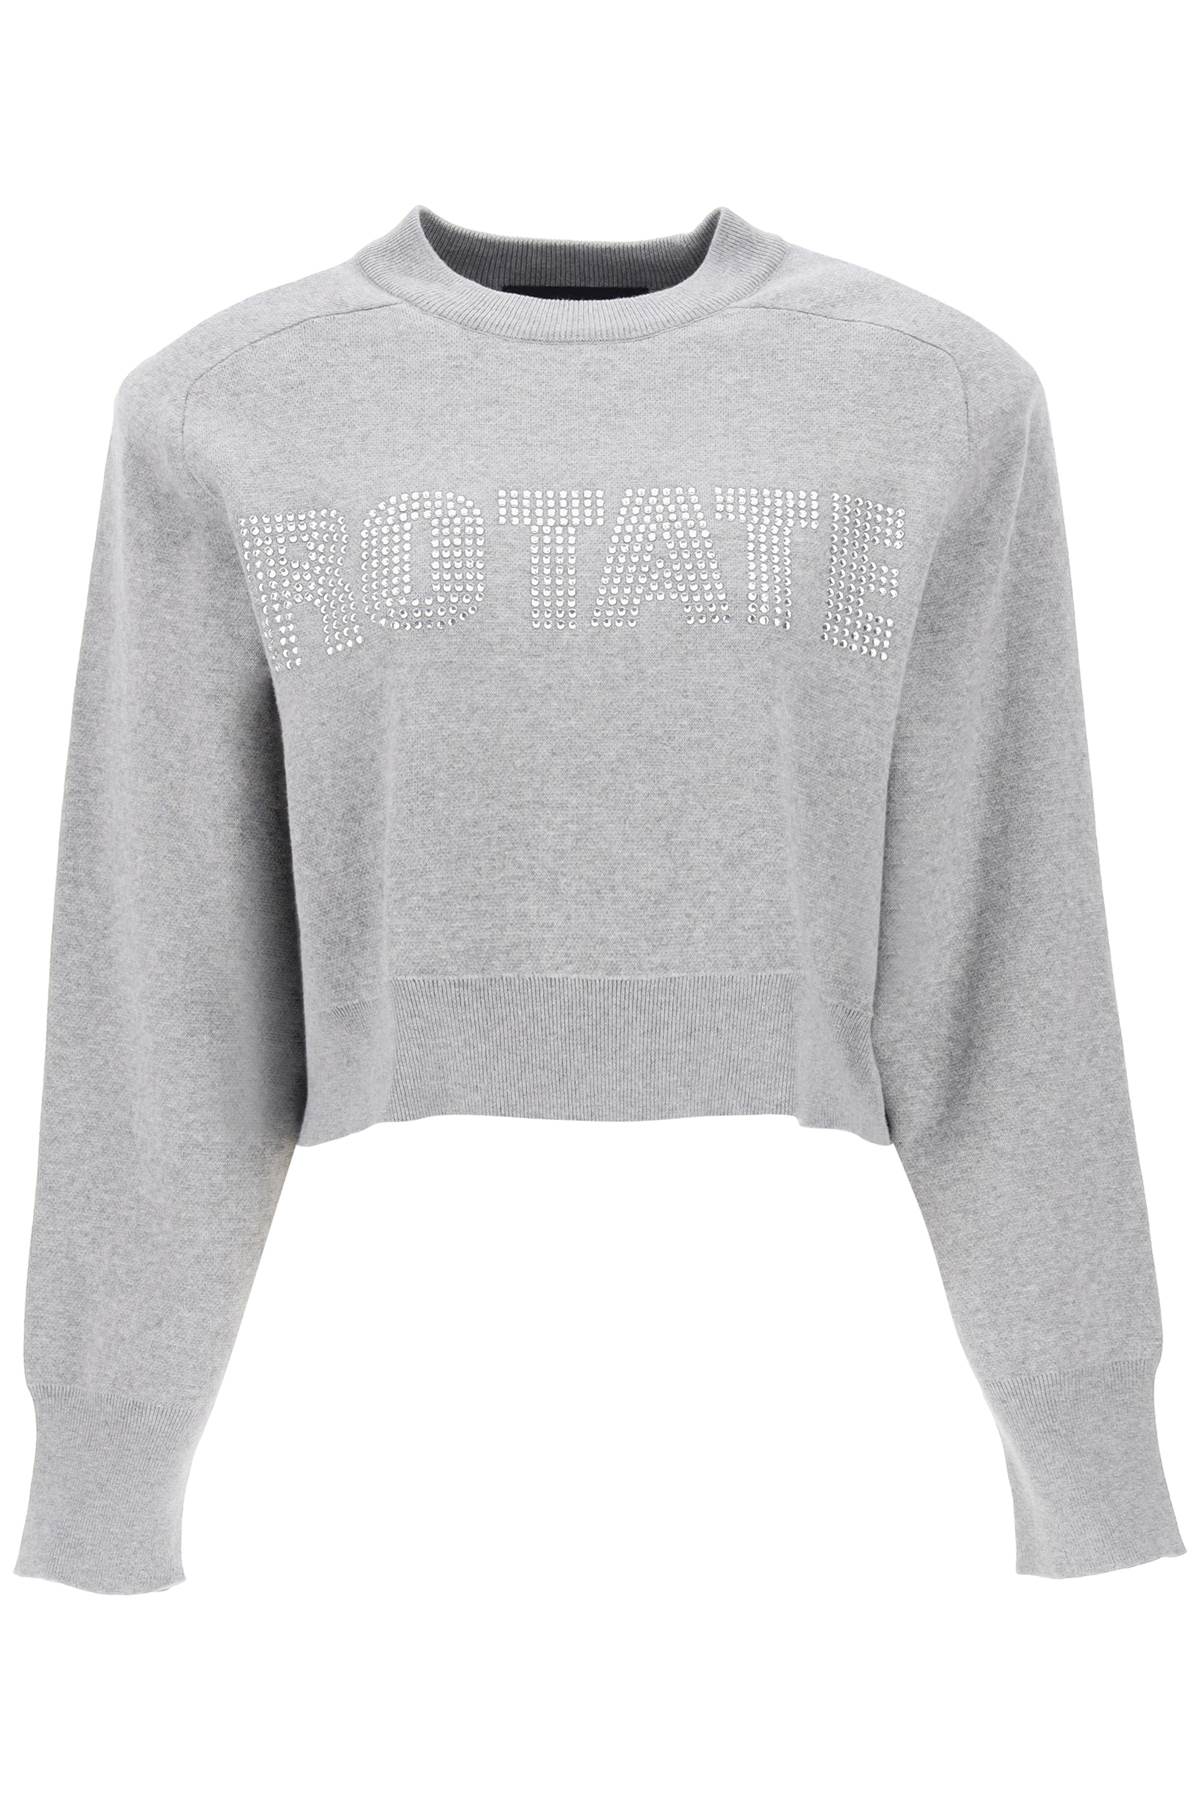 Rotate cropped sweater with rhinestone-studded logo-0